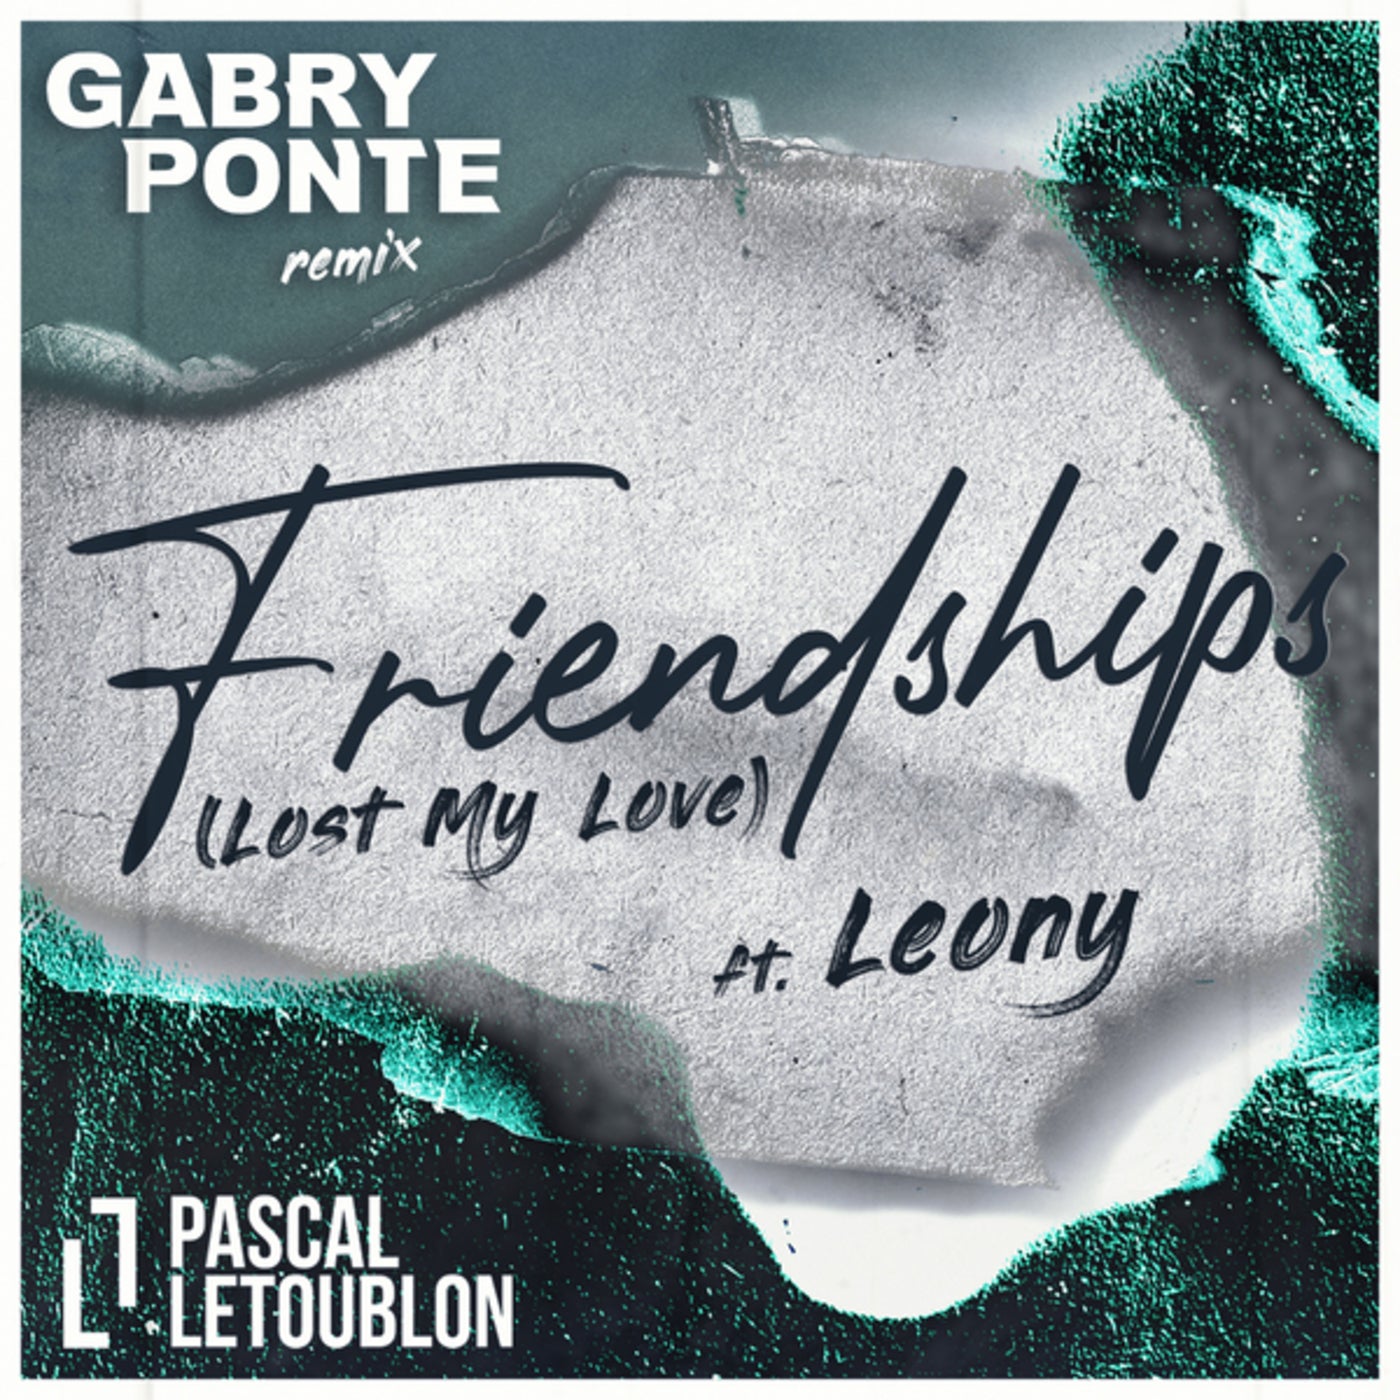 Песня pascal friendship. Pascal Letoublon Friendships. Pascal Letoublon, Leony - Friendships (Lost my Love). Gabry Ponte 2022. Friendships (Lost my Love) [feat. Leony!].